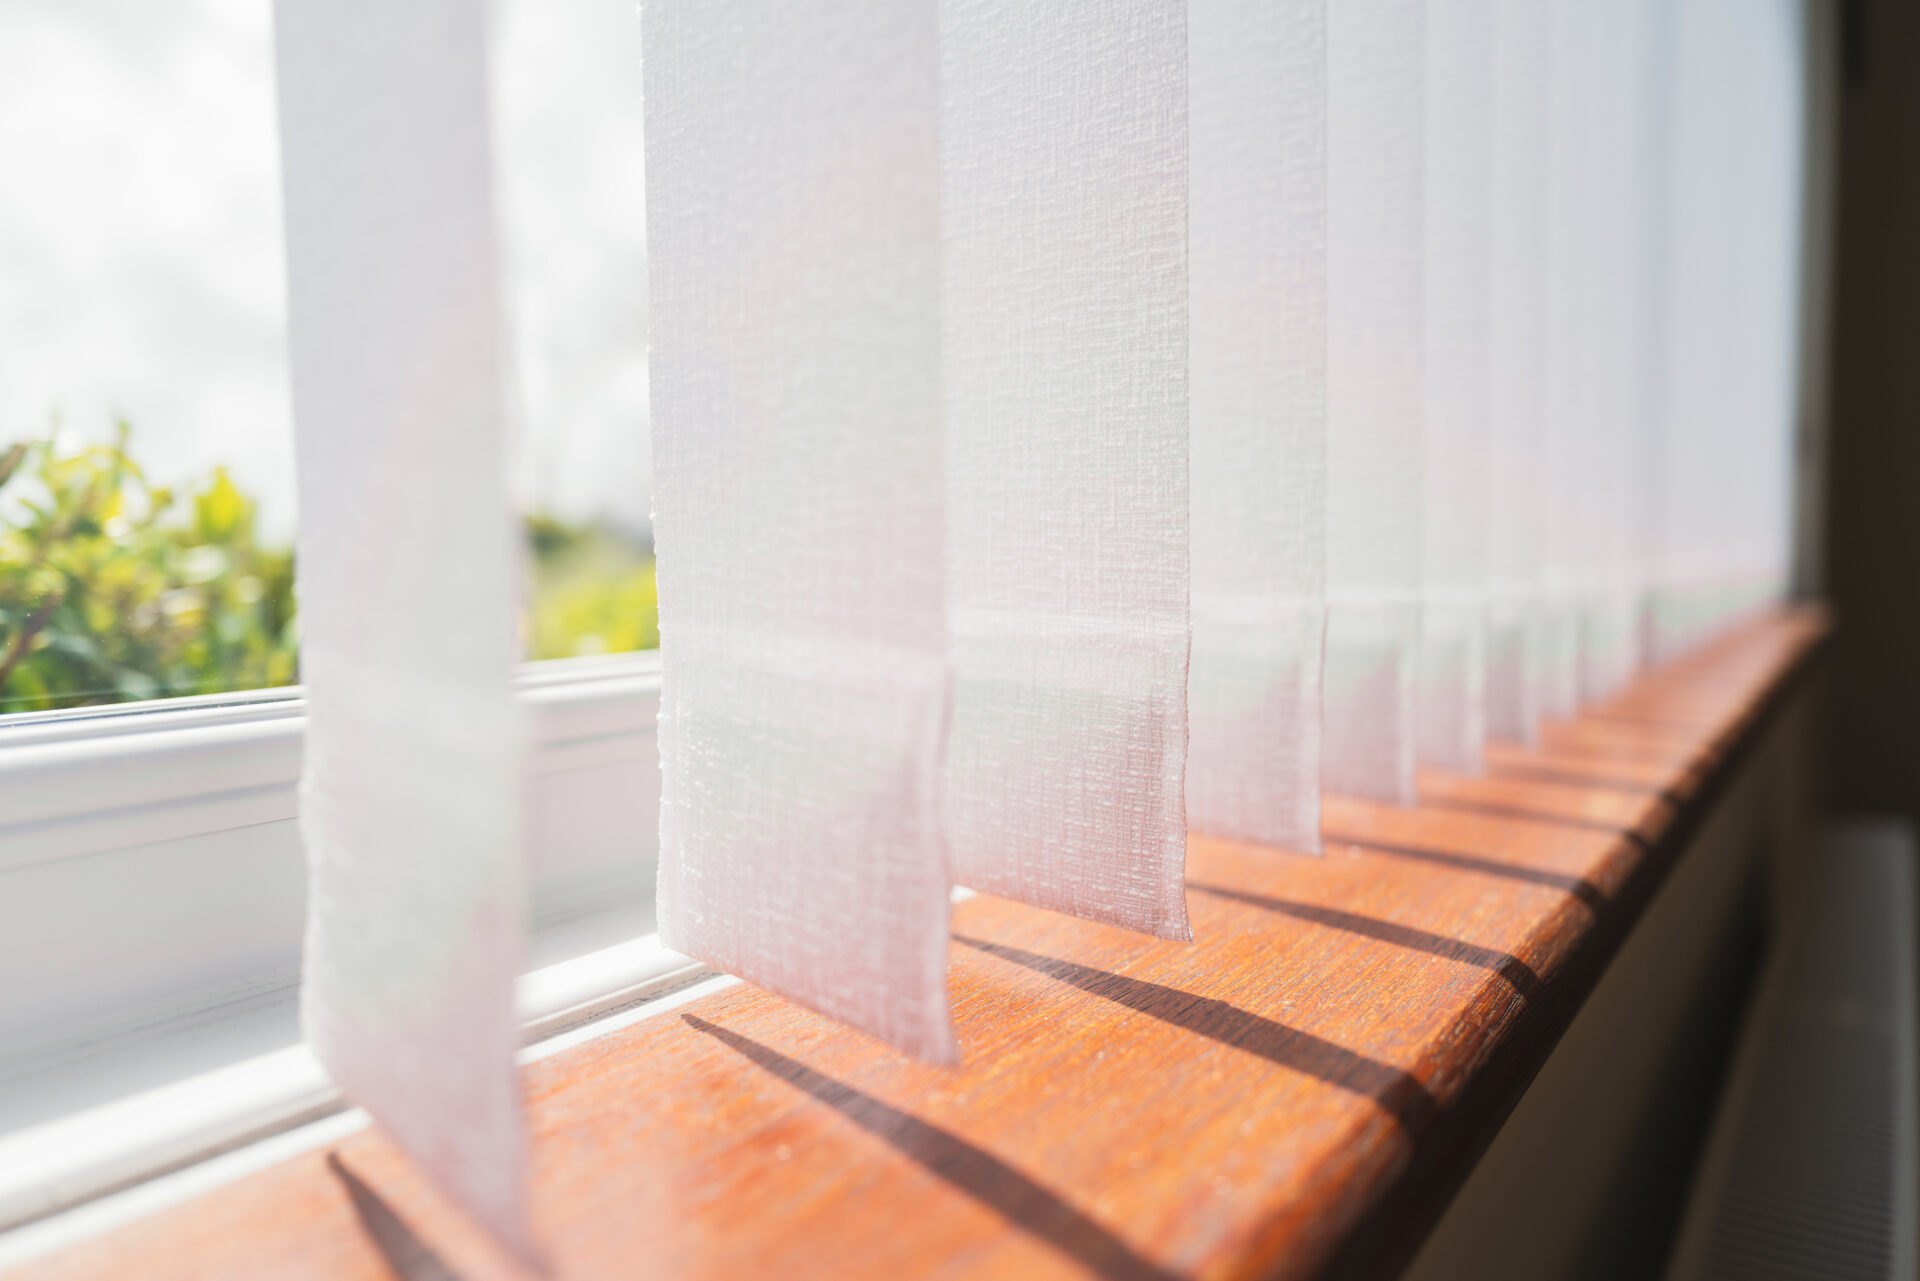 White vertical window blinds slats with sunshine peeking through.